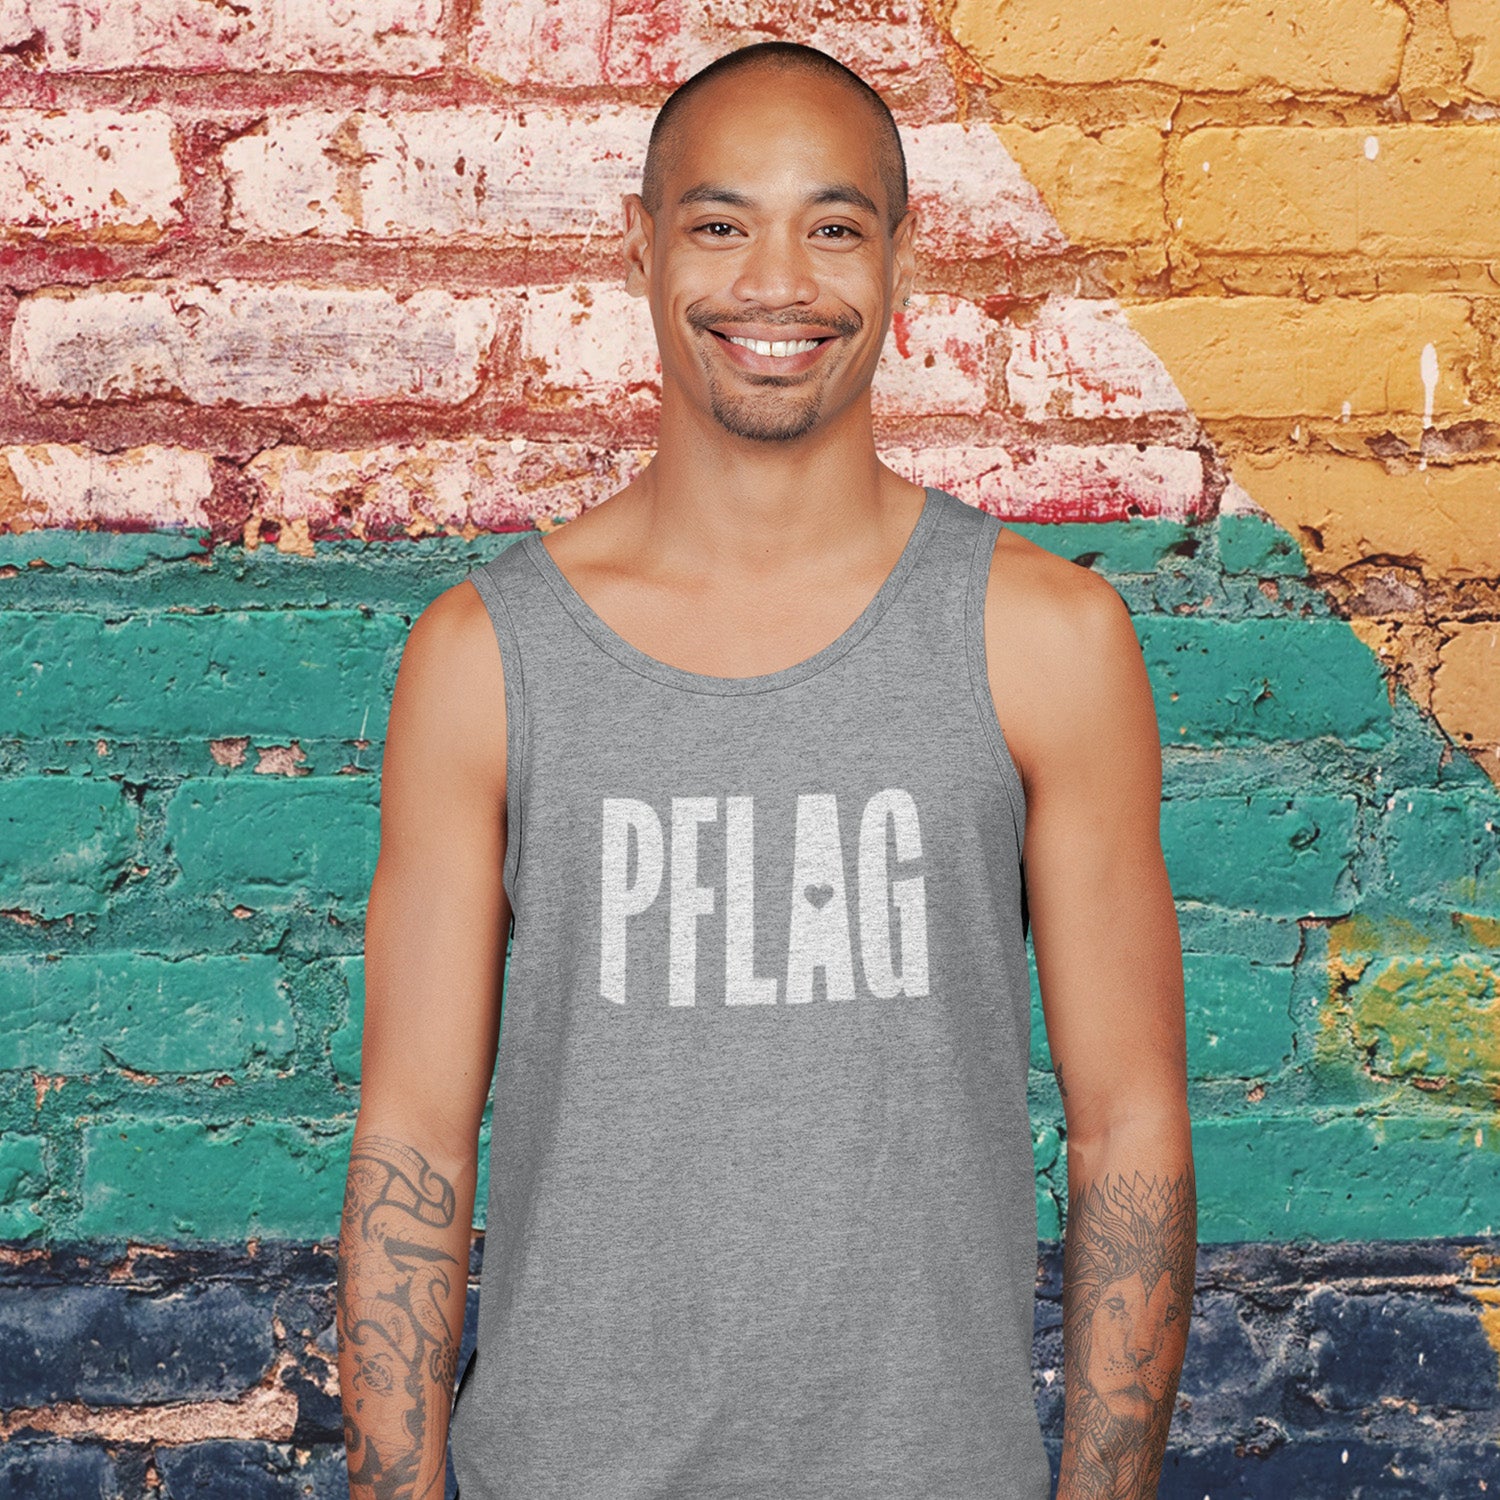 PFLAG Logo - Wide-Cut Tank Top